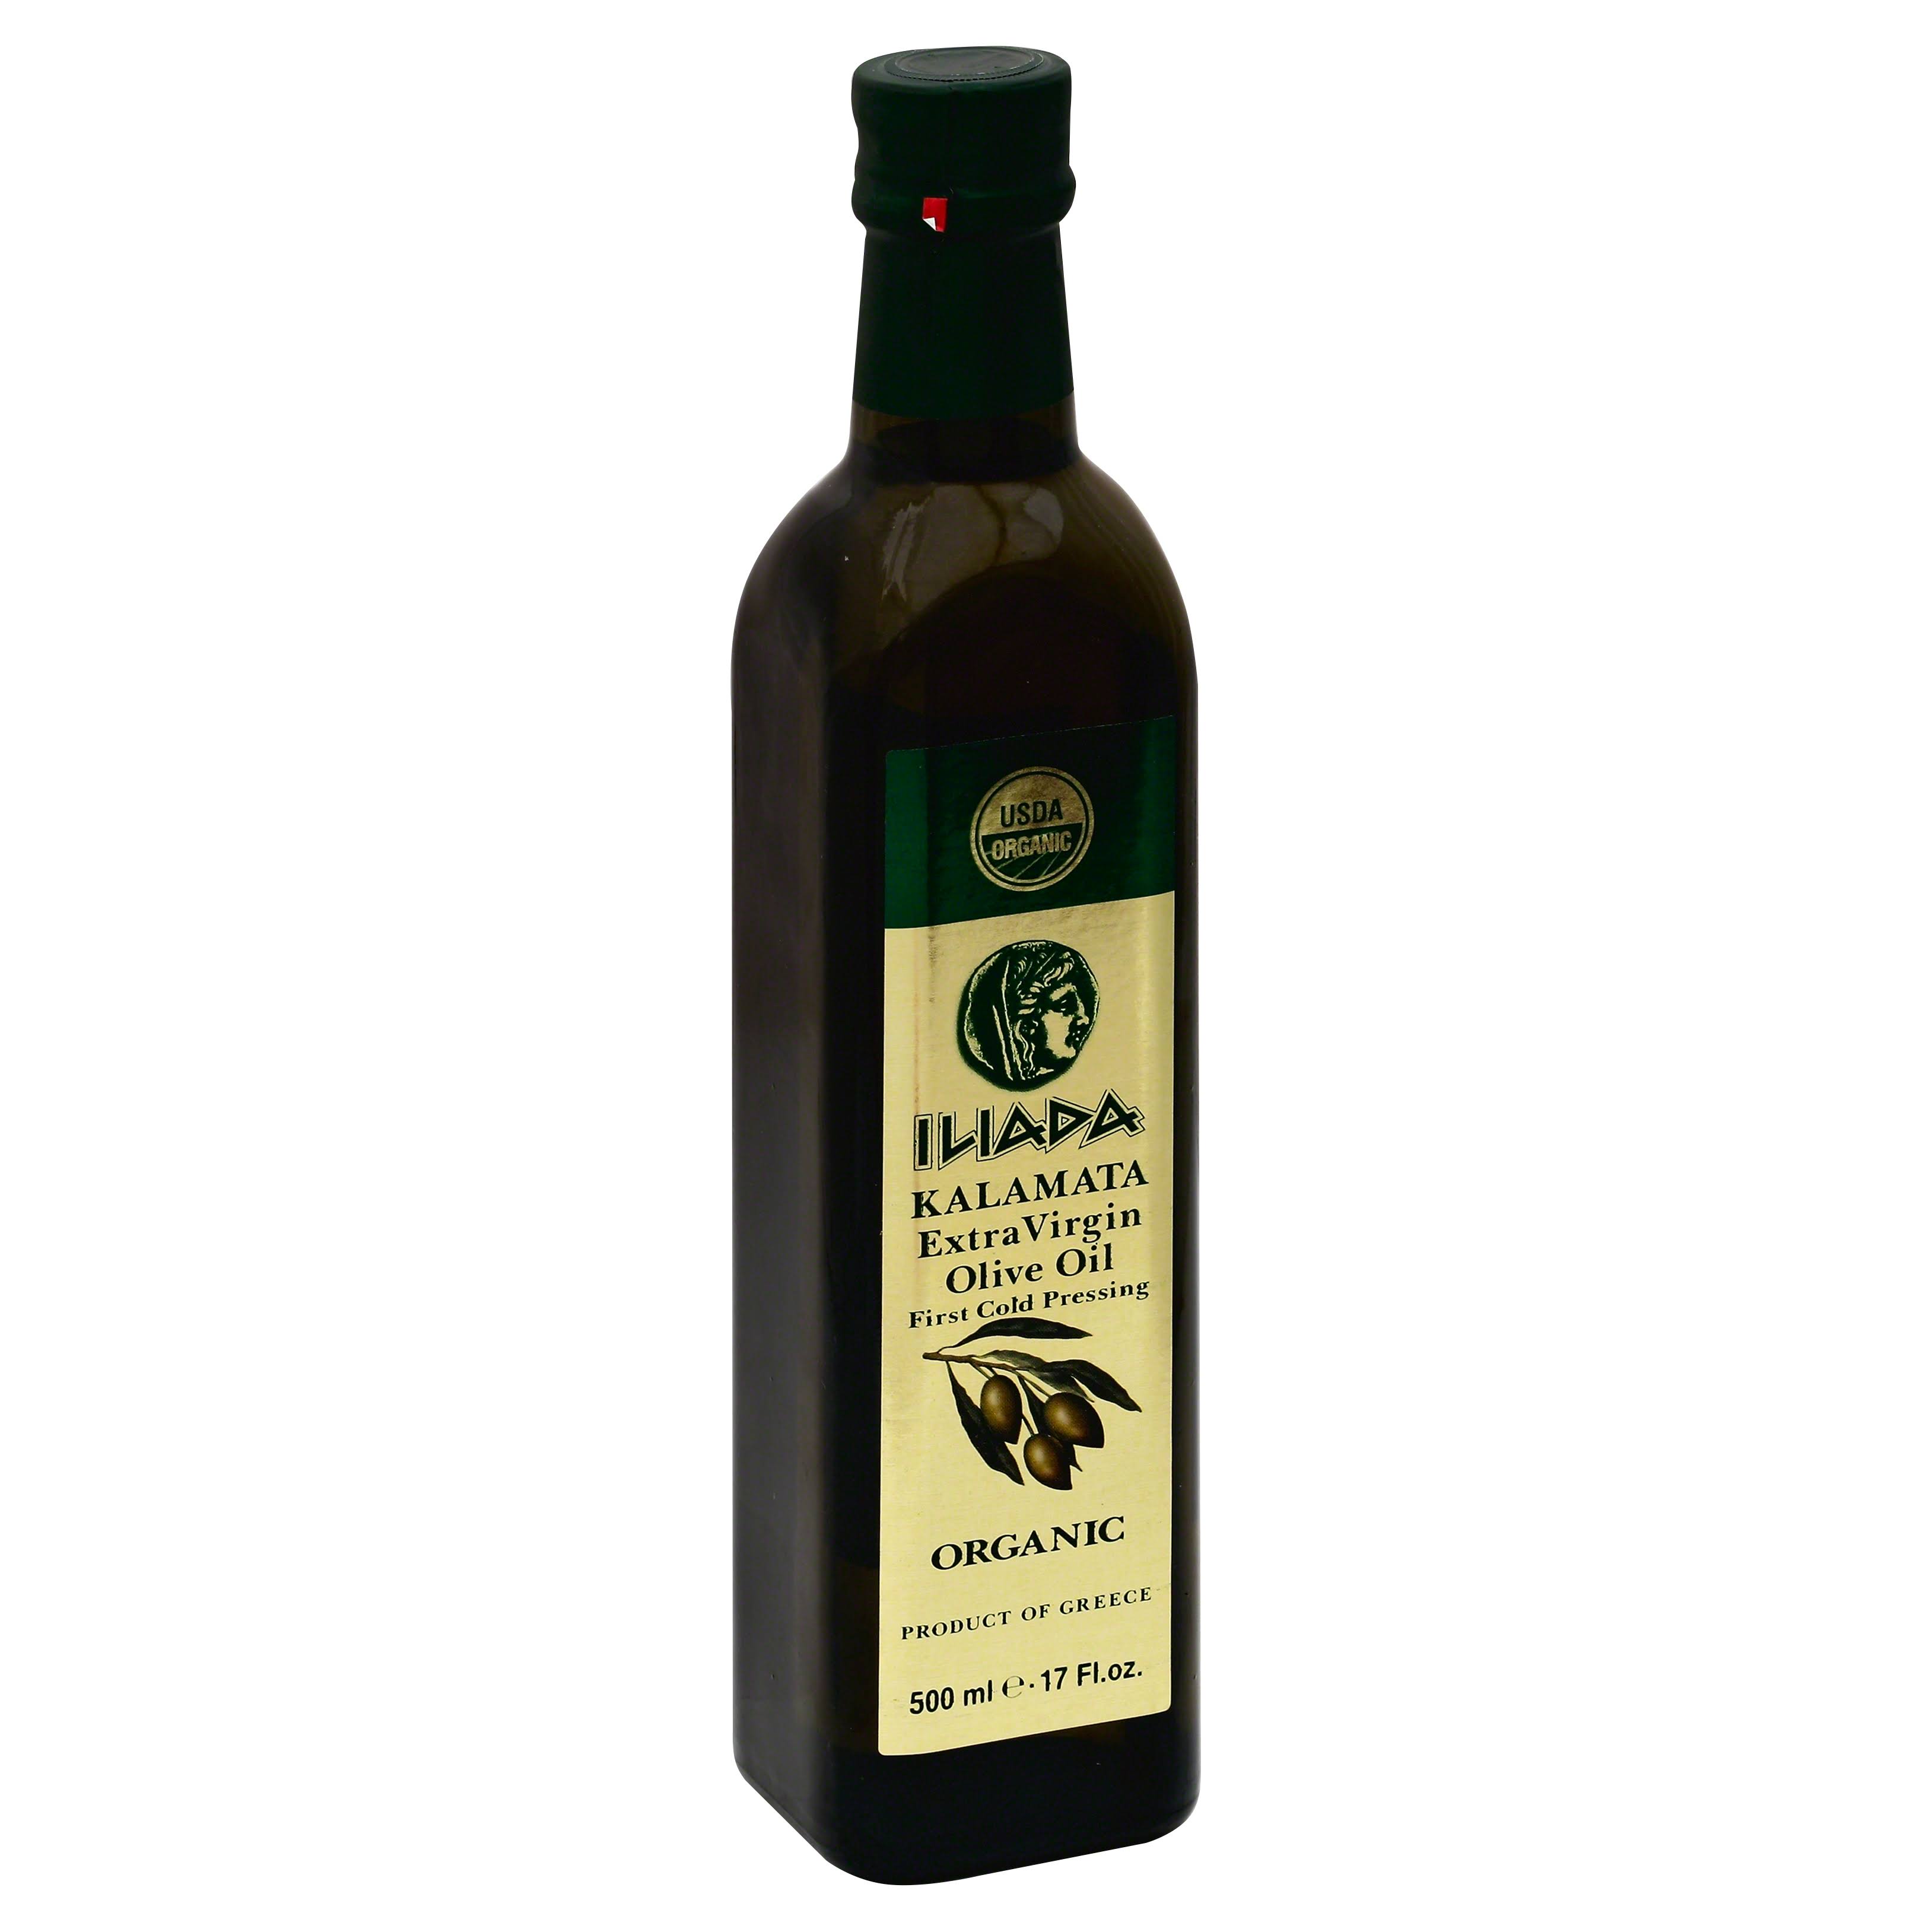 Iliada Olive Oil, Organic, Extra Virgin, Kalamata - 17 fl oz